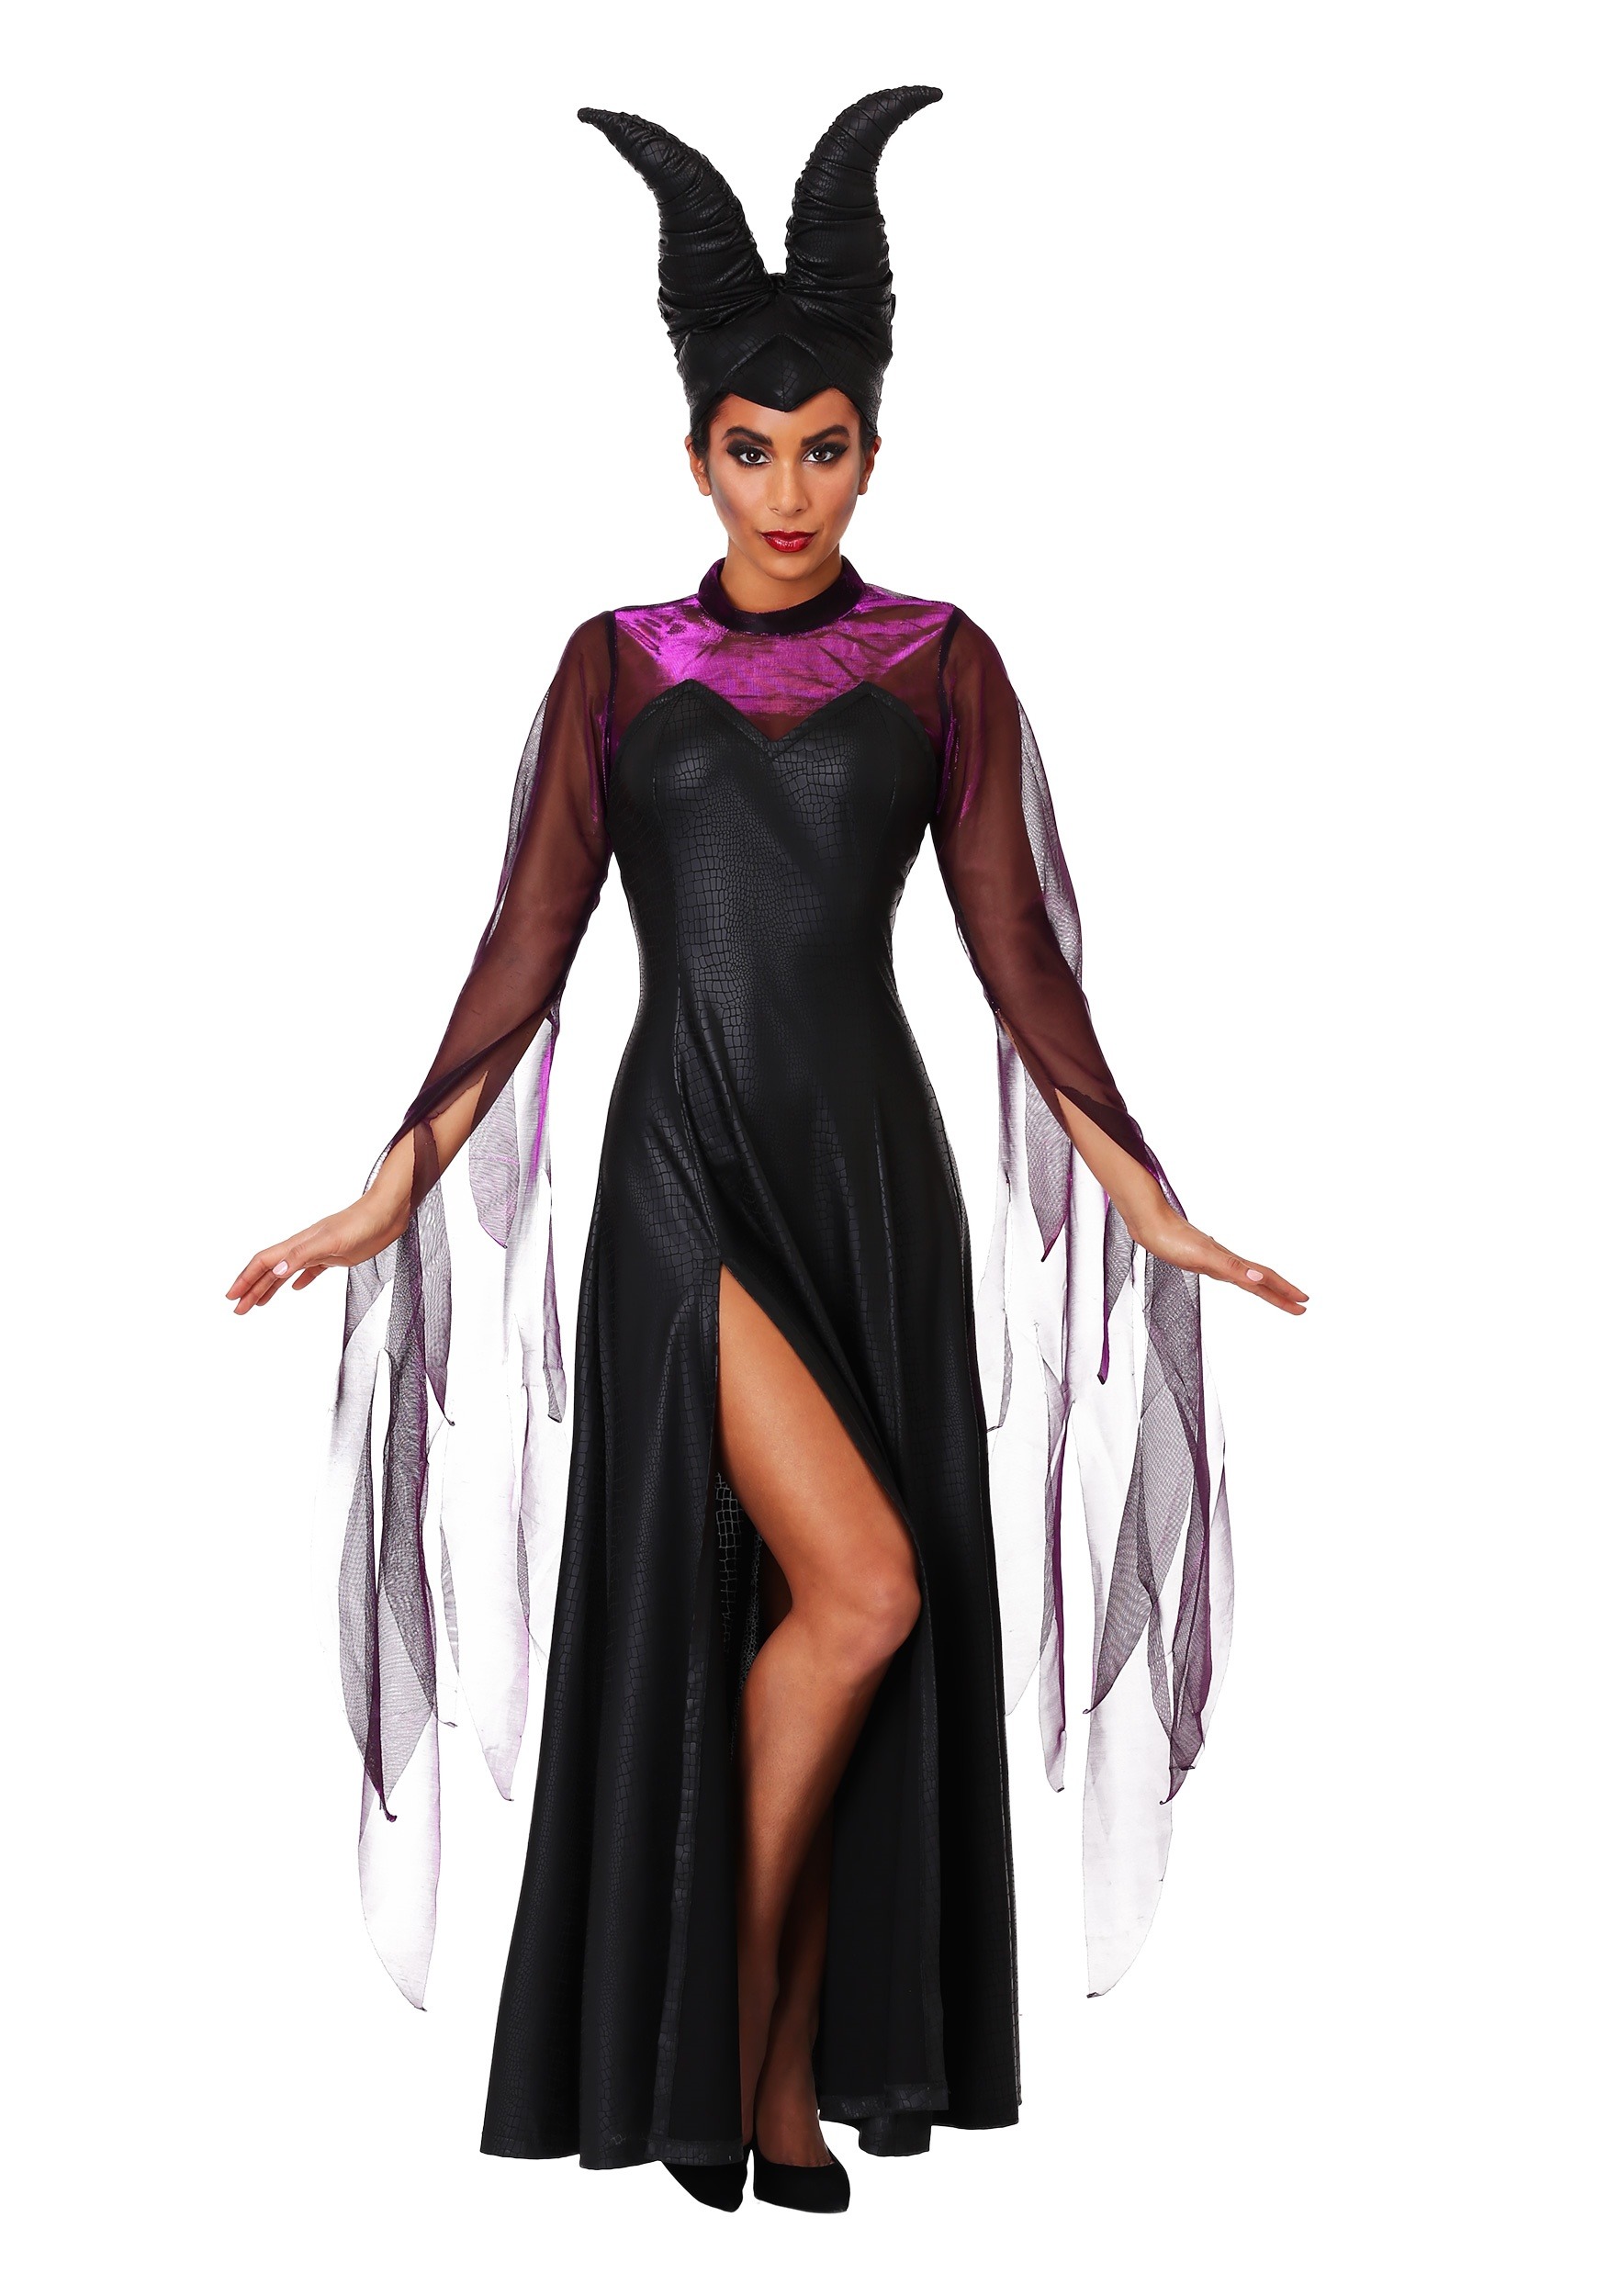 Photos - Fancy Dress FUN Costumes Malicious Queen Women's Costume Black/Purple FUN2627AD